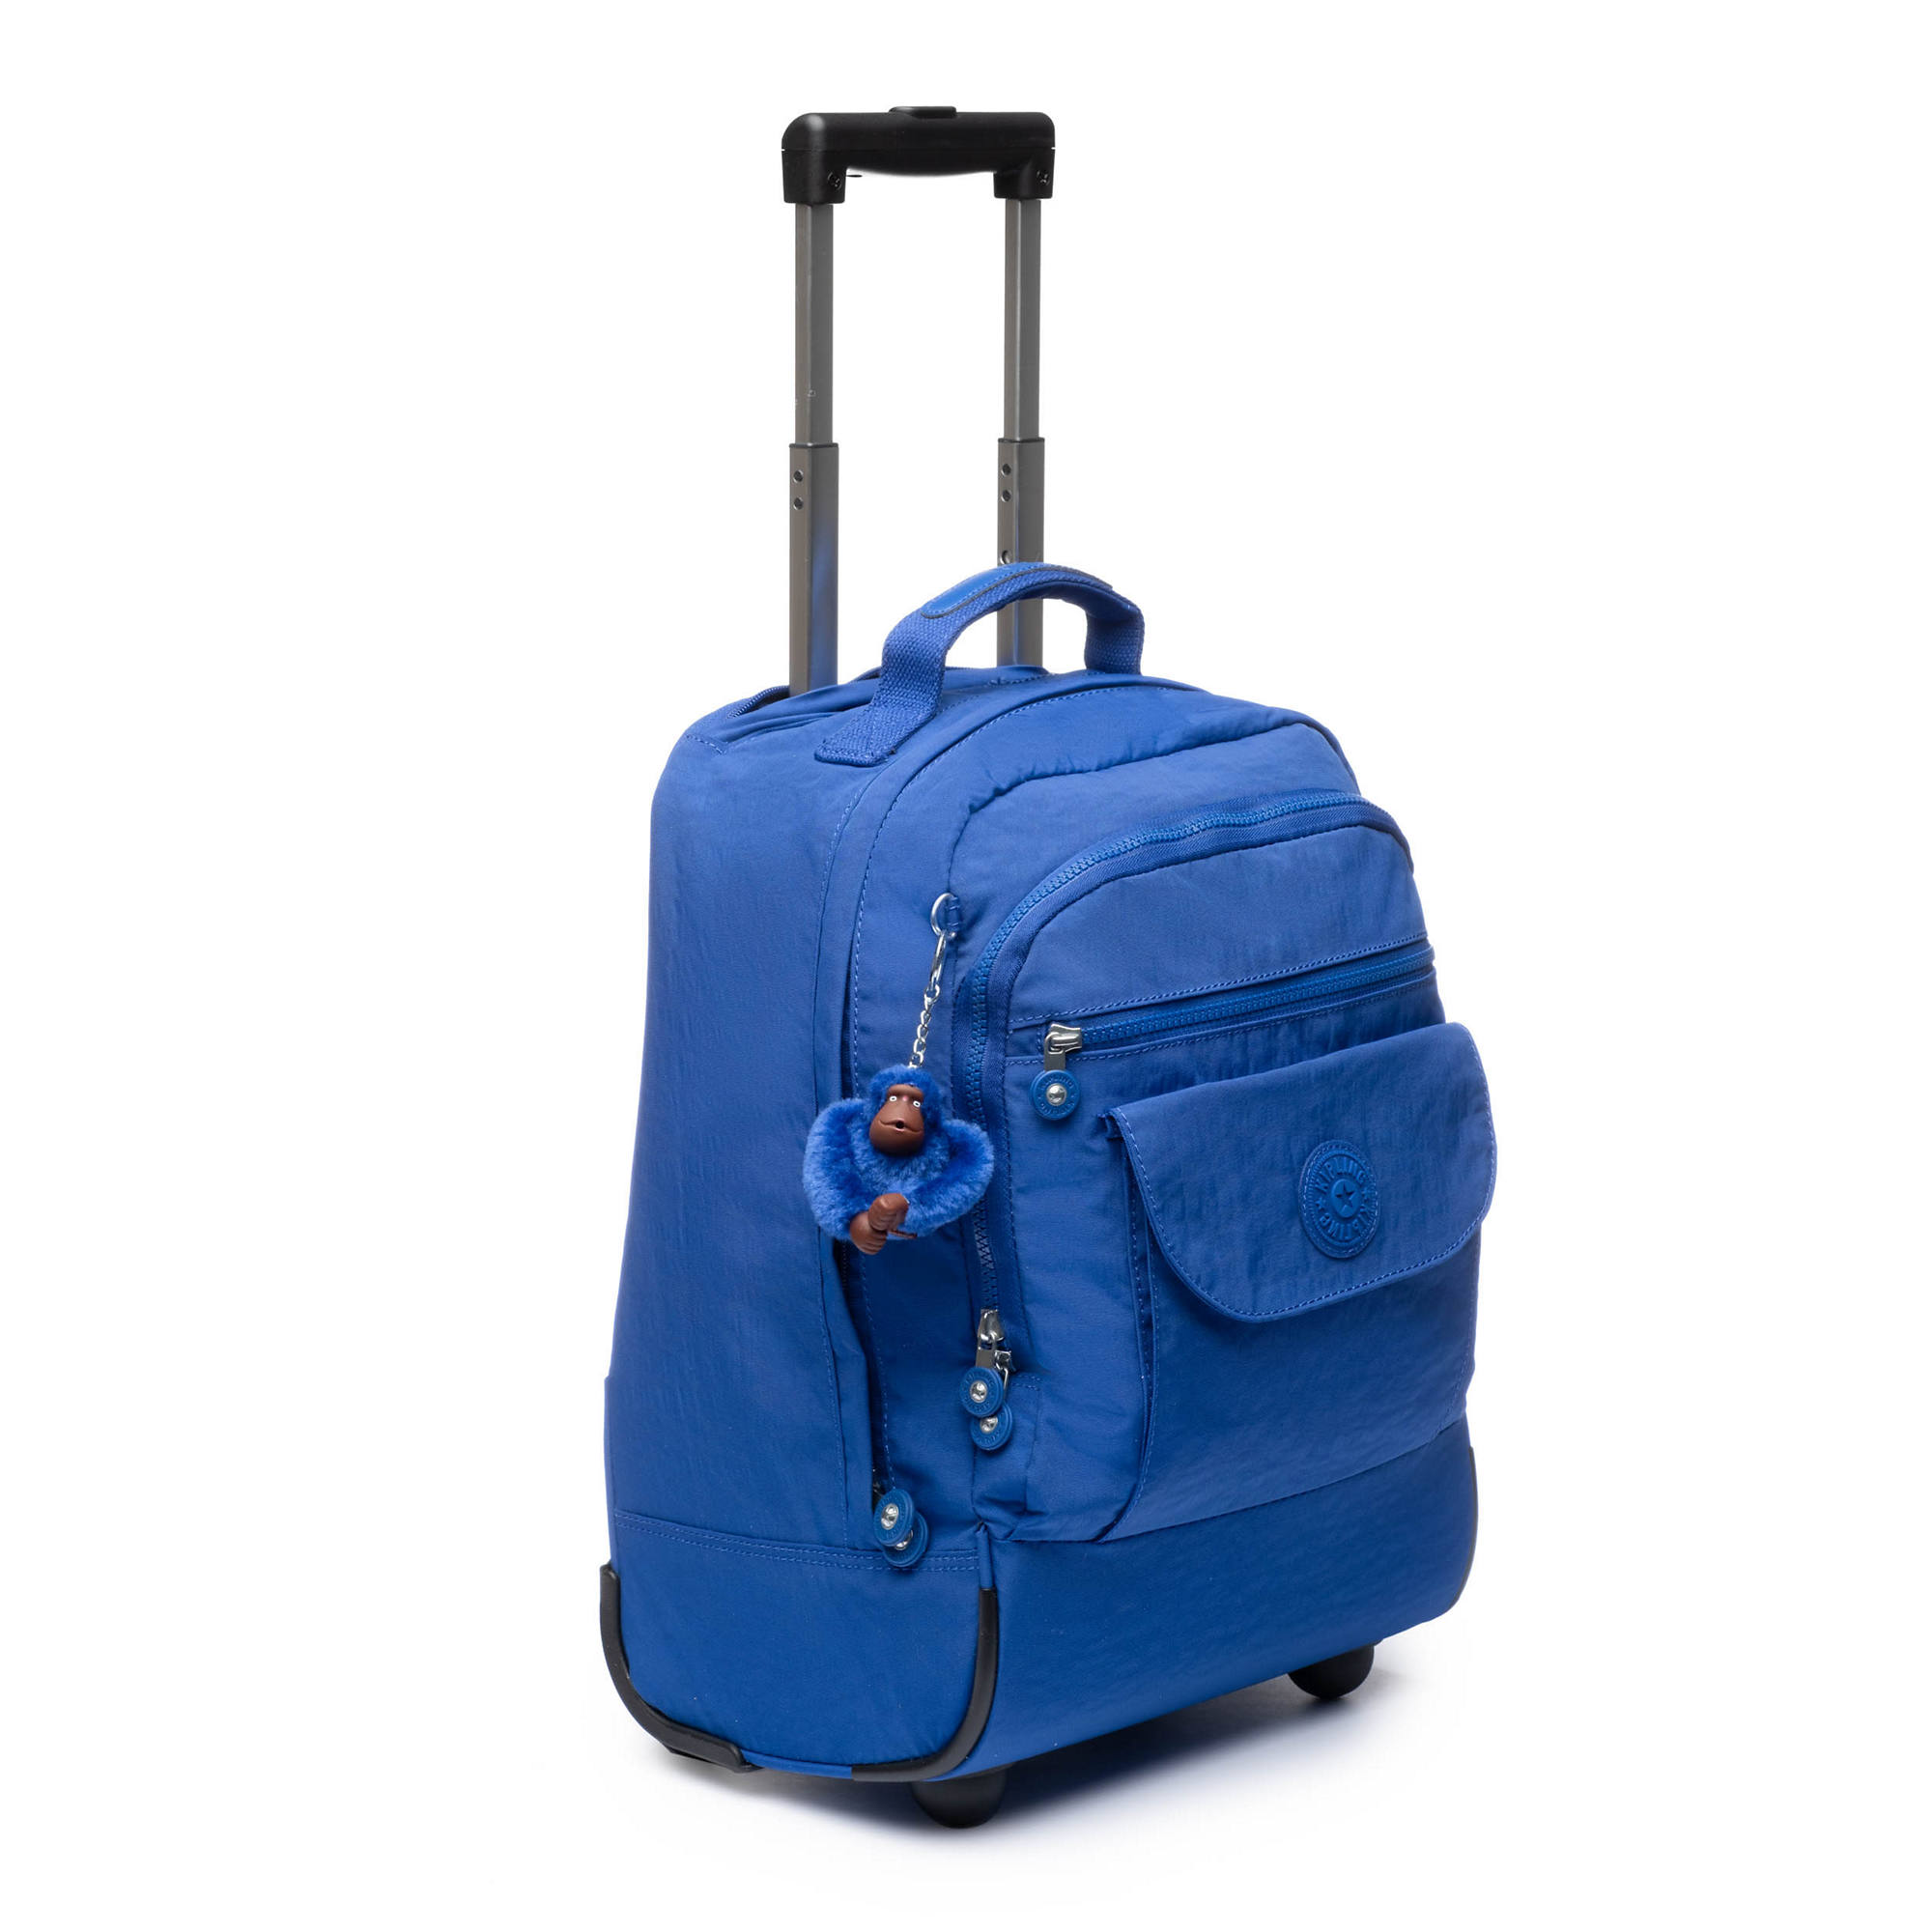 Kipling Sanaa Large Metallic Rolling Backpack | eBay